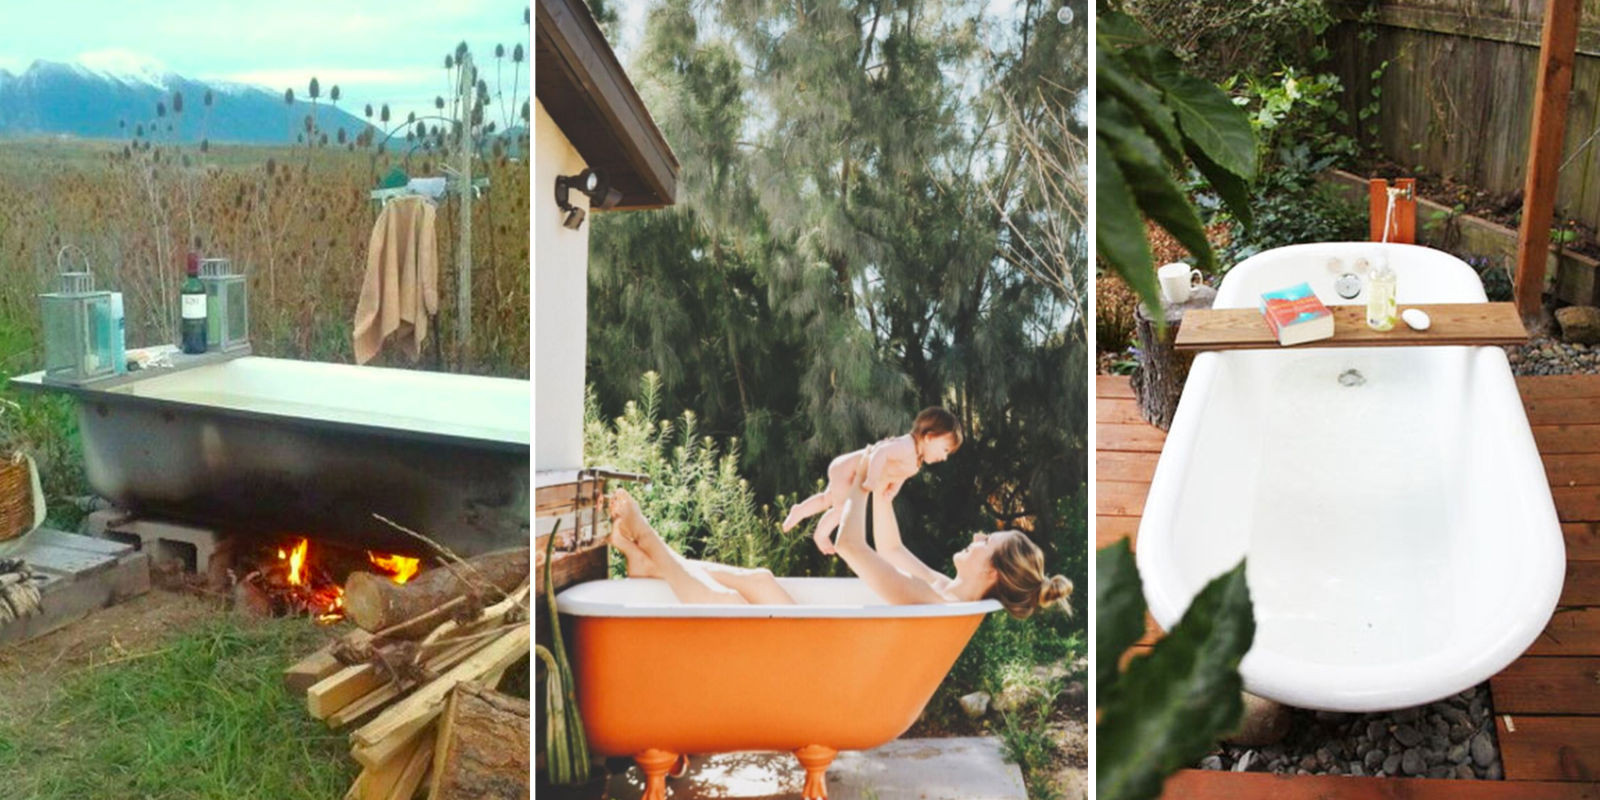 DIY Outdoor Soaking Tub
 Backyard Bathtubs for Soaking Up the Great Outdoors